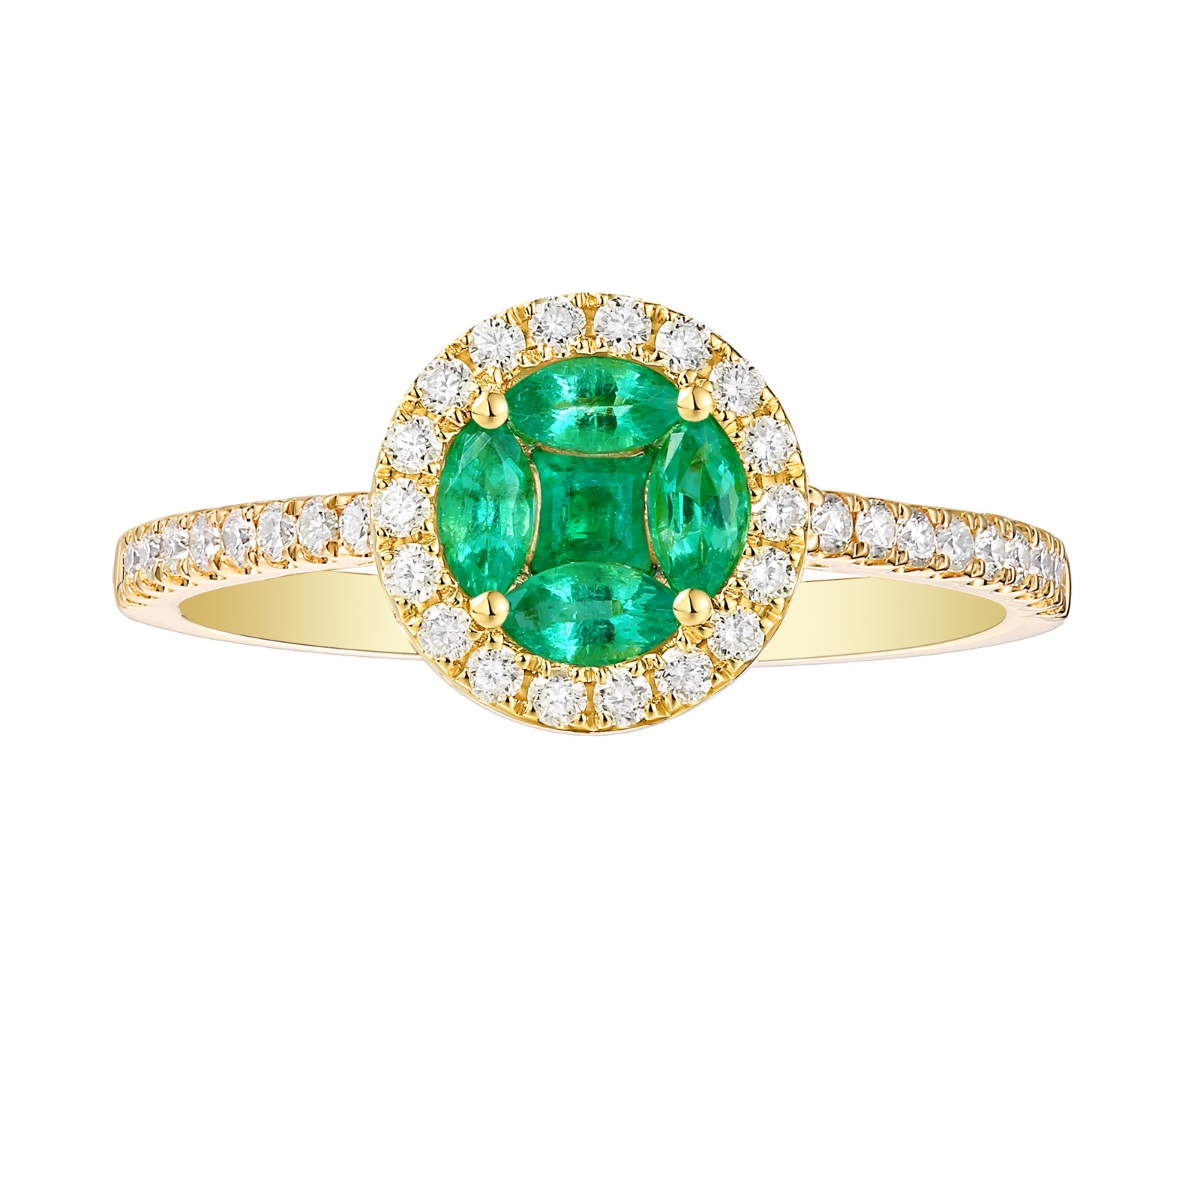 R36361EME – 18K Yellow Gold  Diamond and Gemstone Ring, 0.67 TCW